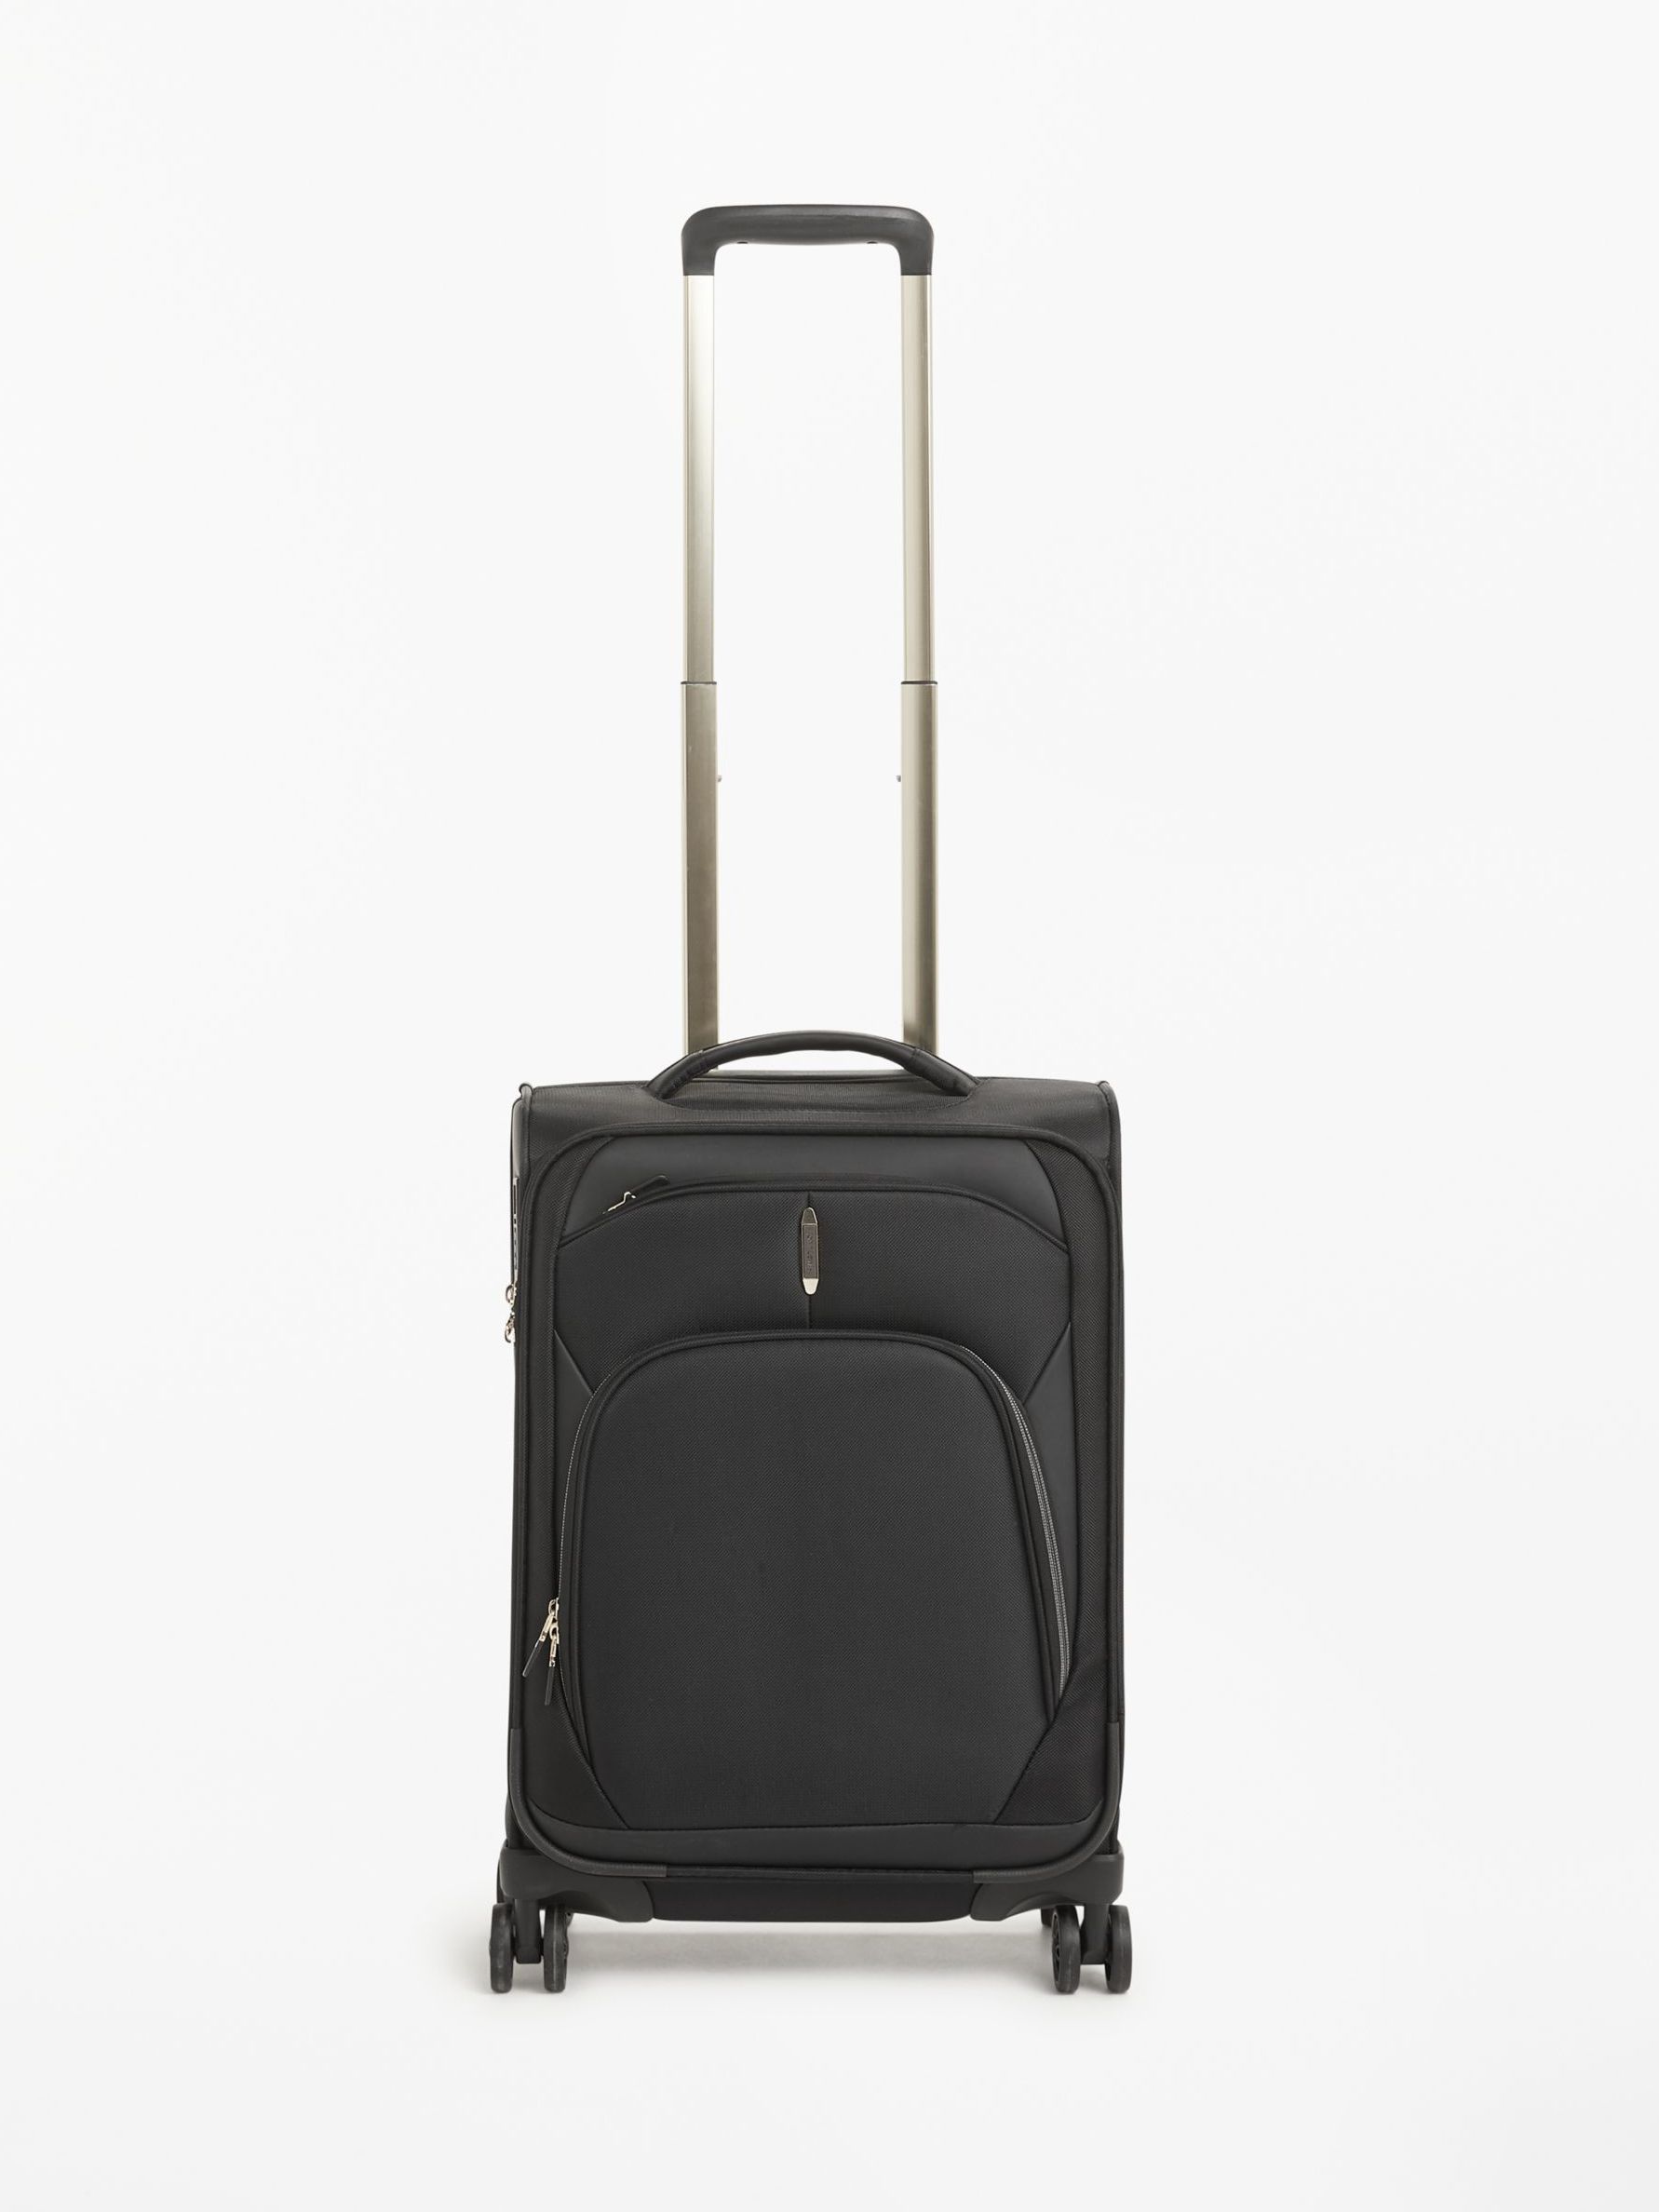 John Lewis & Partners 4-Wheel Noir Luxury 55cm Cabin Suitcase, Black/Gold at John Lewis & Partners